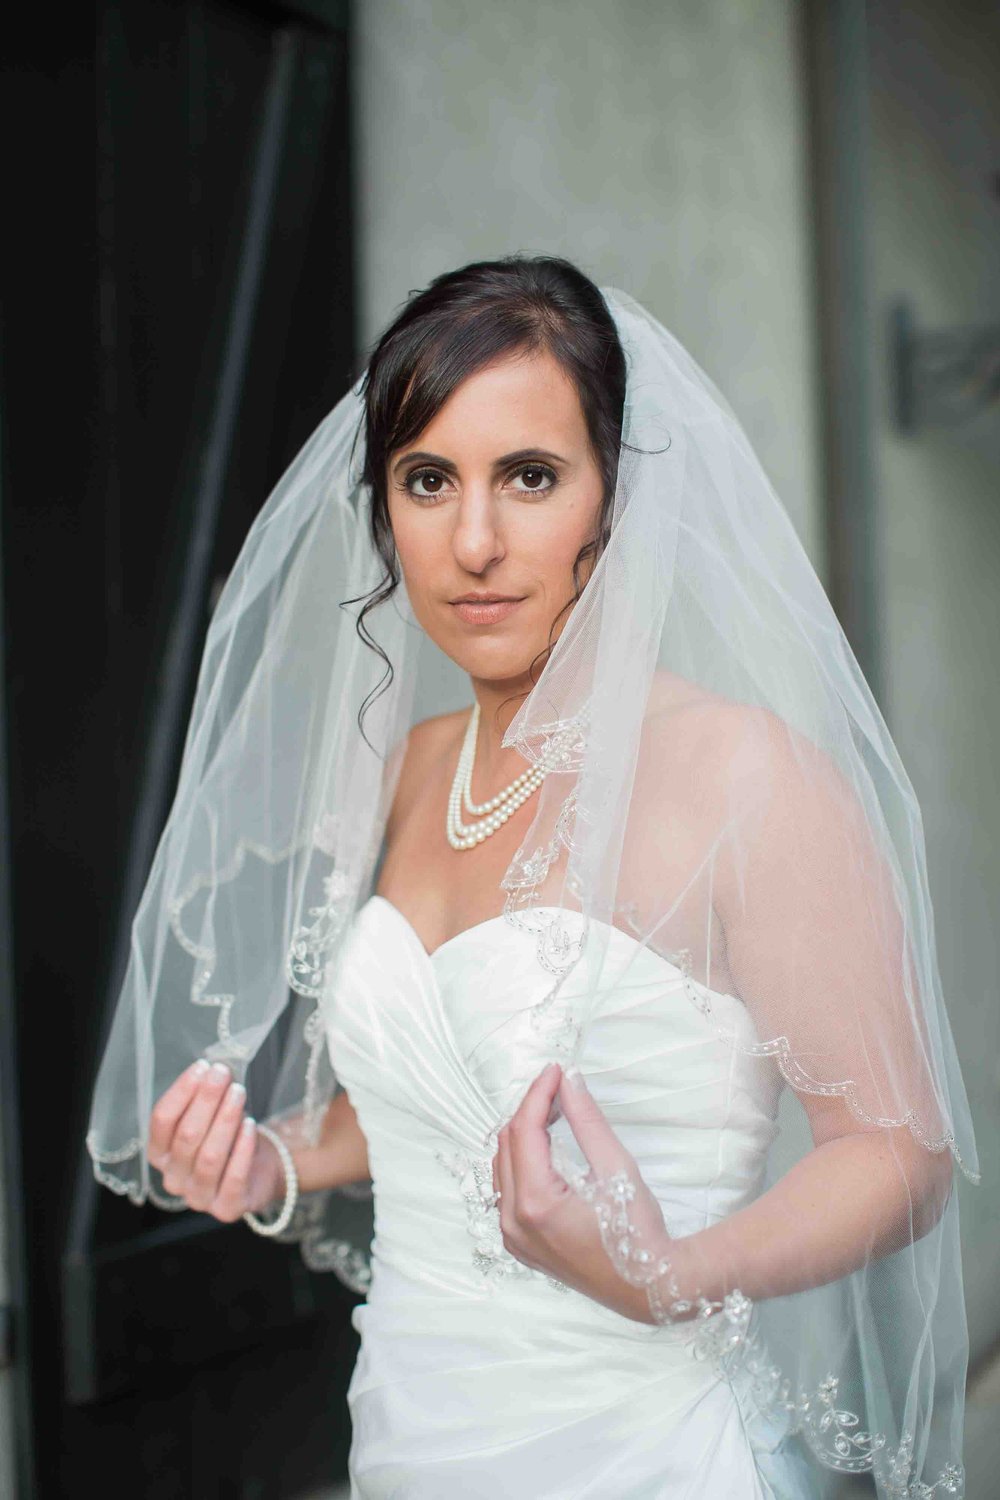 Bride holding veil